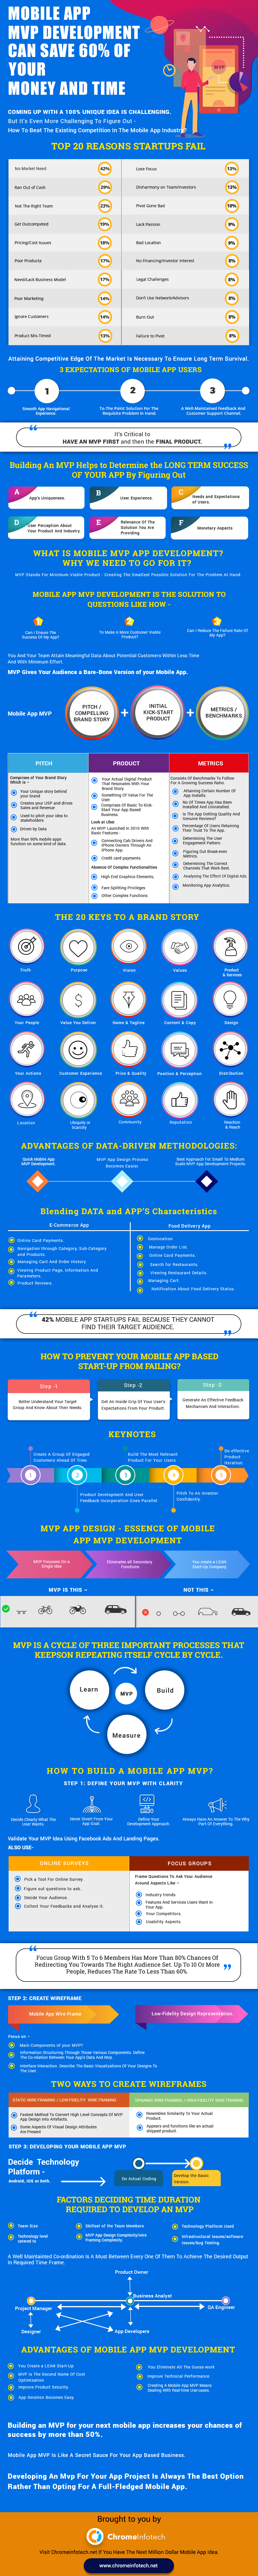 Mobile App MVP Infographic